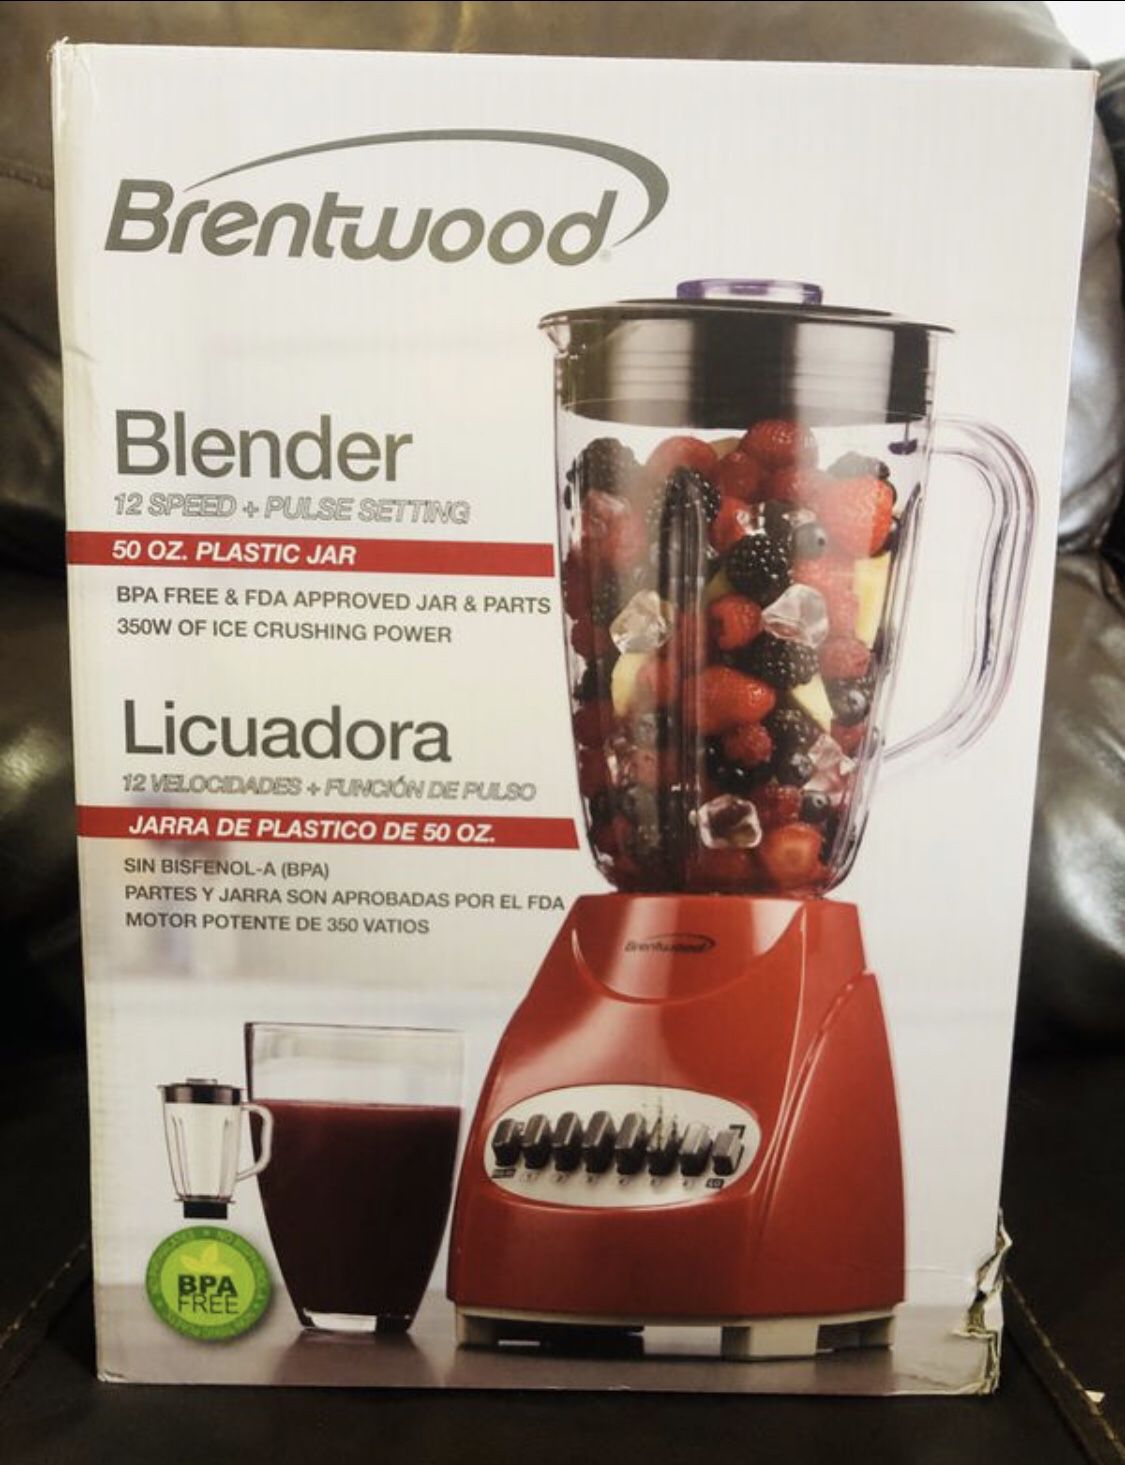 Brentwood licuadora 50 oz new, Blender 12 speeds